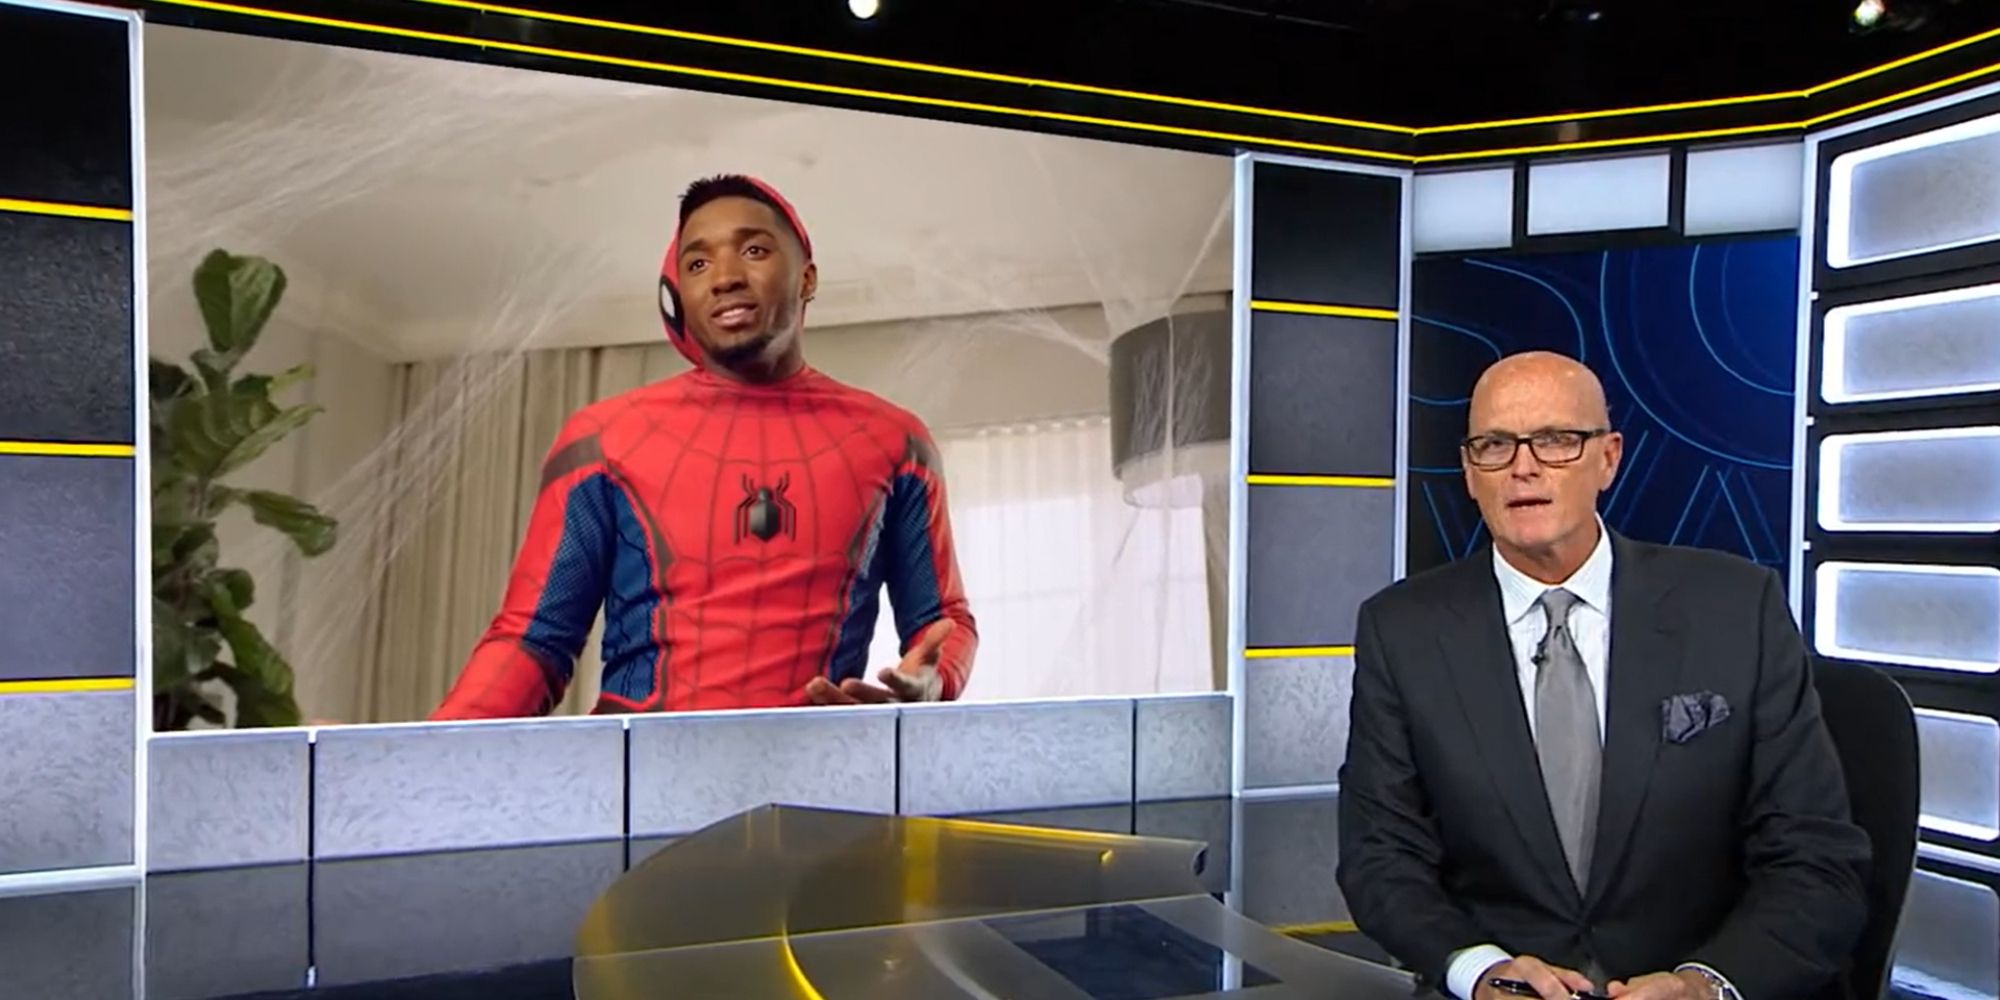 Spida-Mitchell? Spider-Man: No Way Home Promo Pokes Fun at Cartoon Rumors